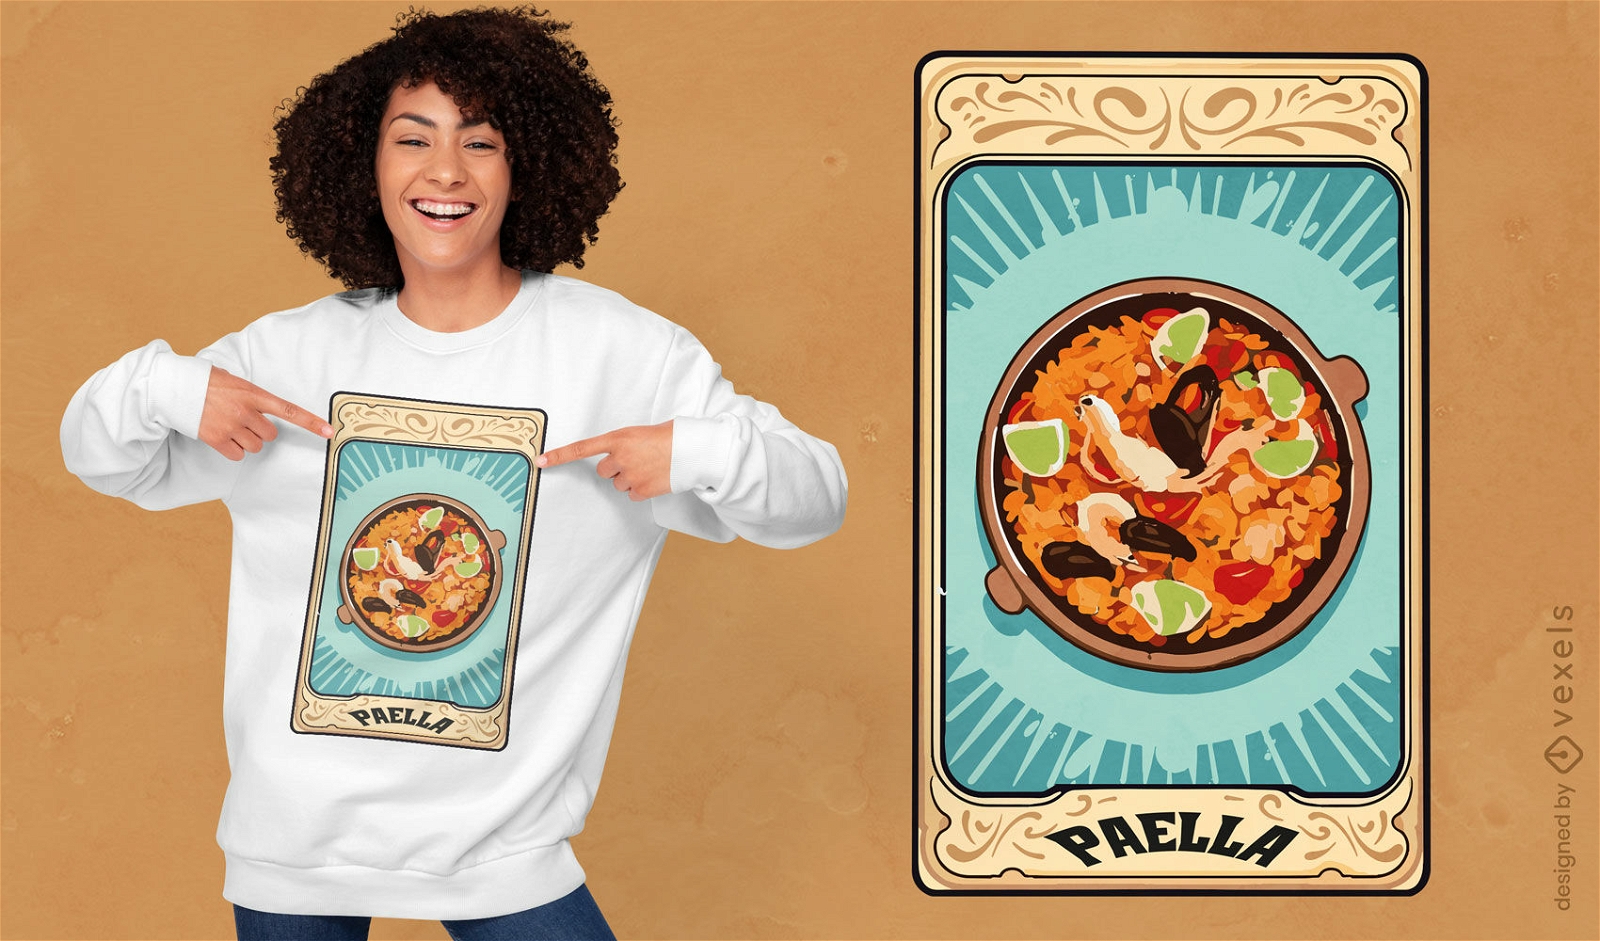 Tarot card paella t-shirt design